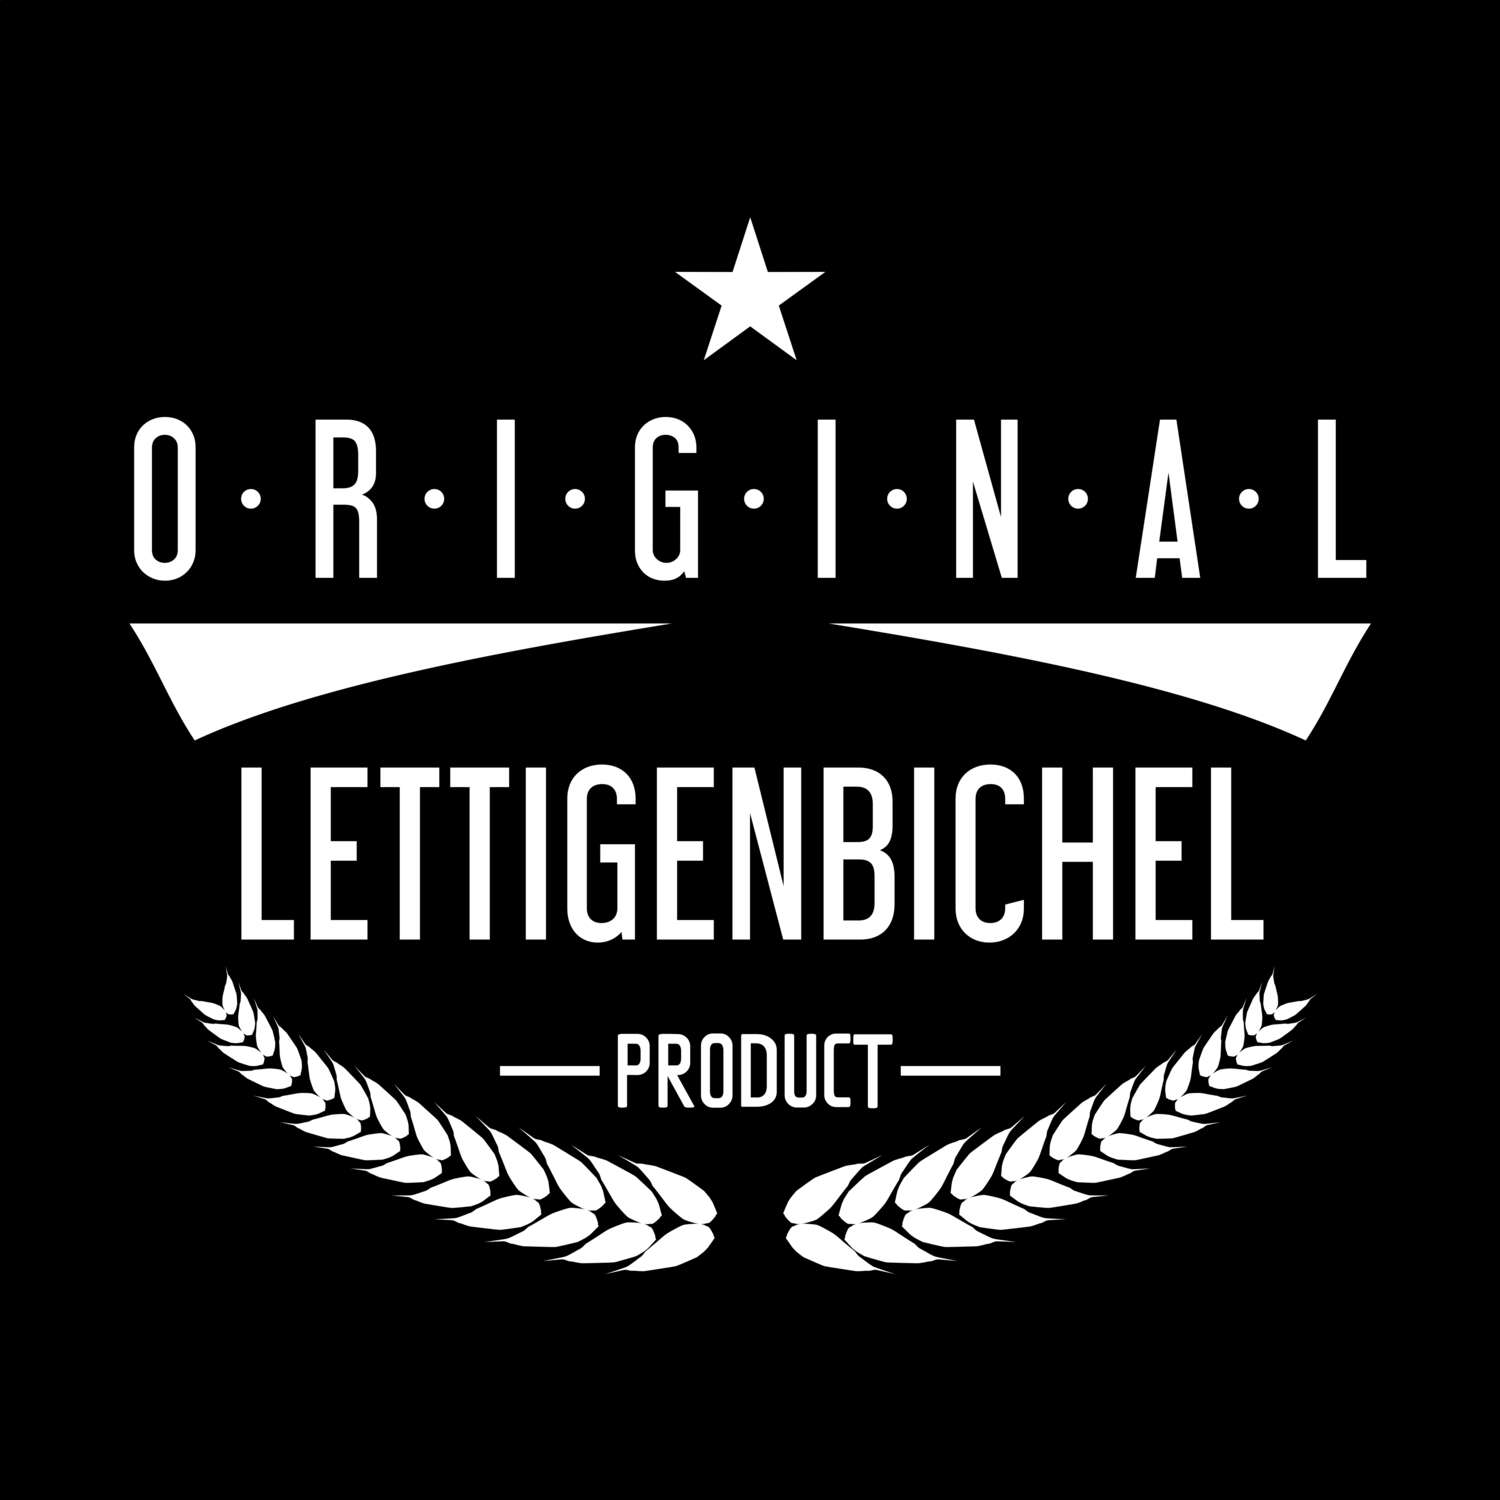 Lettigenbichel T-Shirt »Original Product«